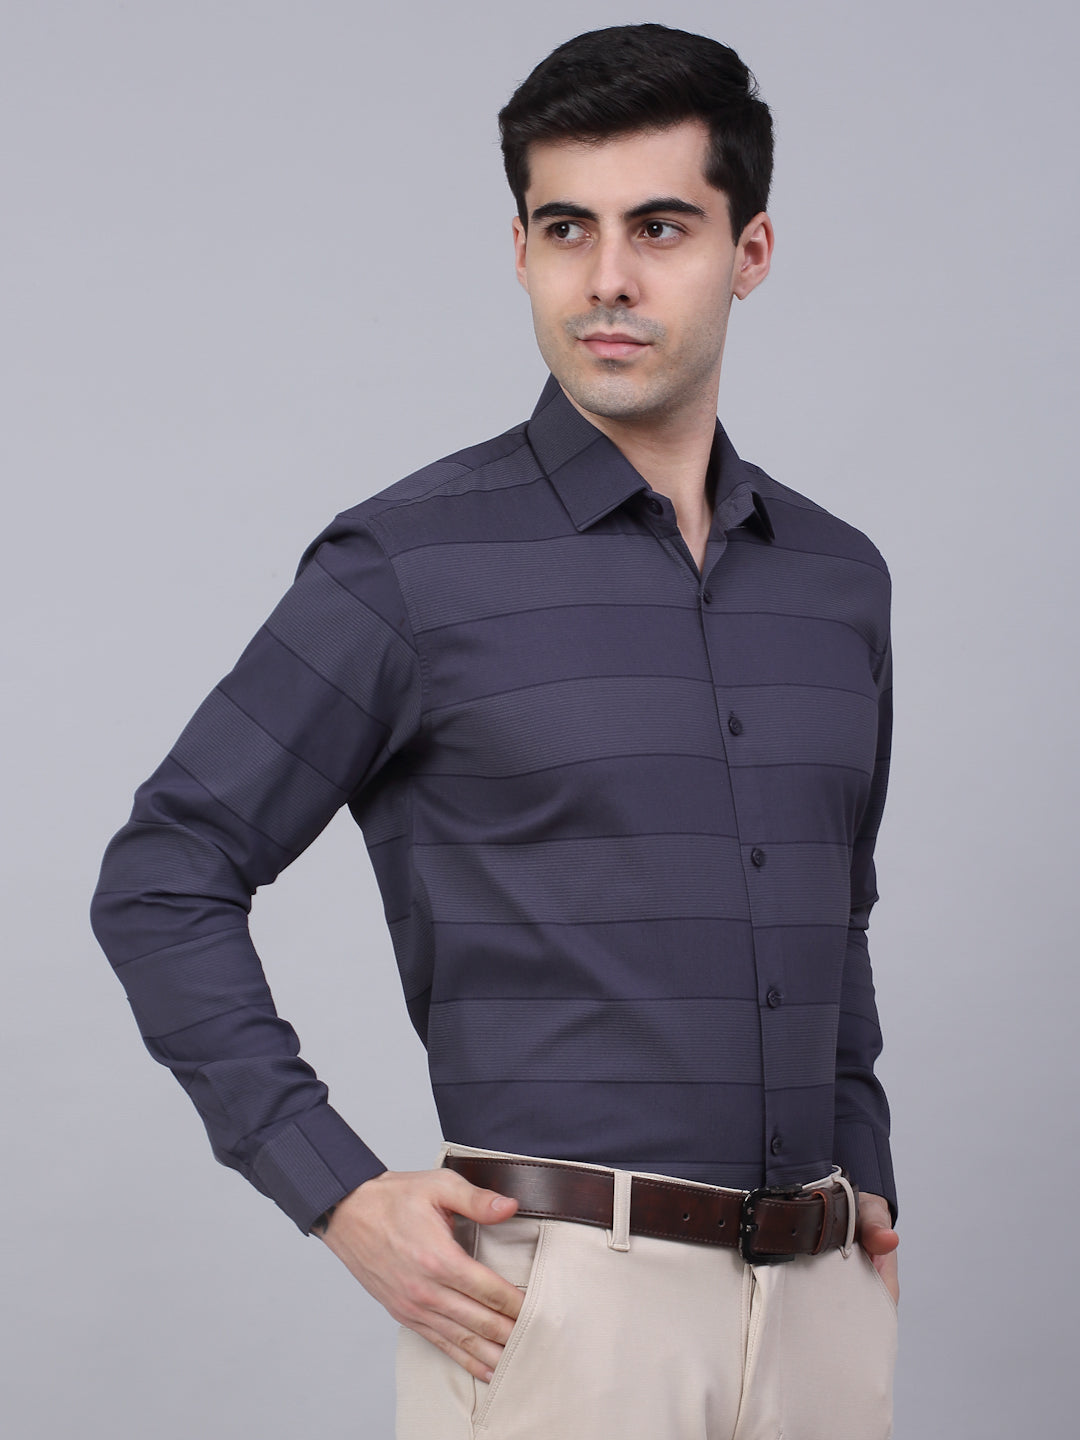 Men's Grey Horizontal Striped Formal Shirt